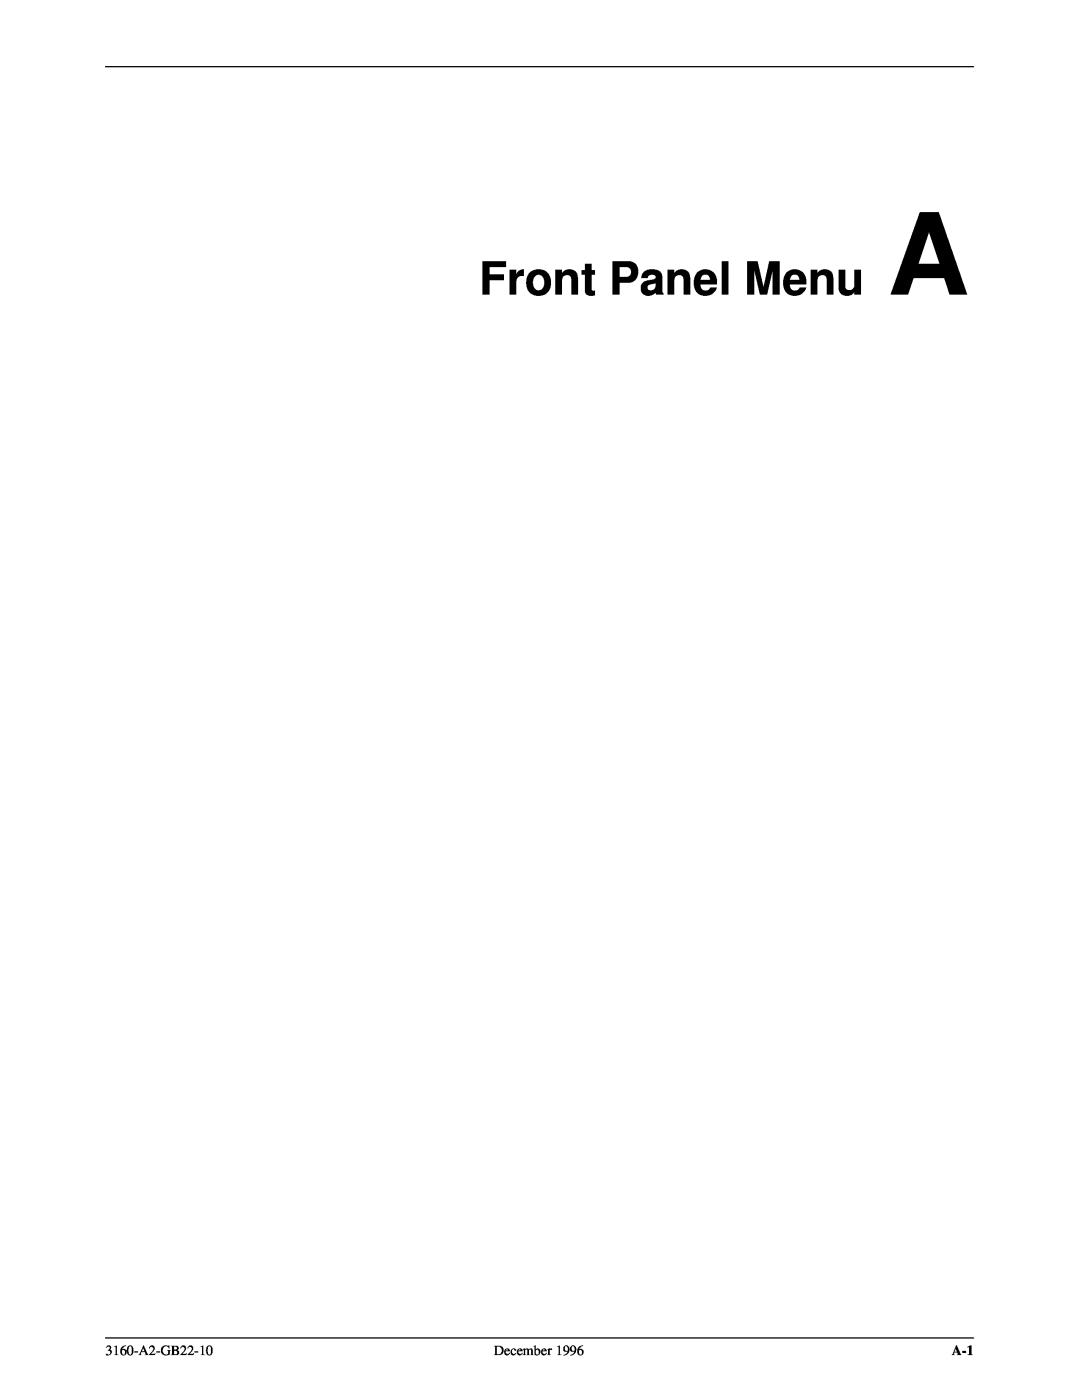 Paradyne 316x manual Front Panel Menu A, 3160-A2-GB22-10, December 